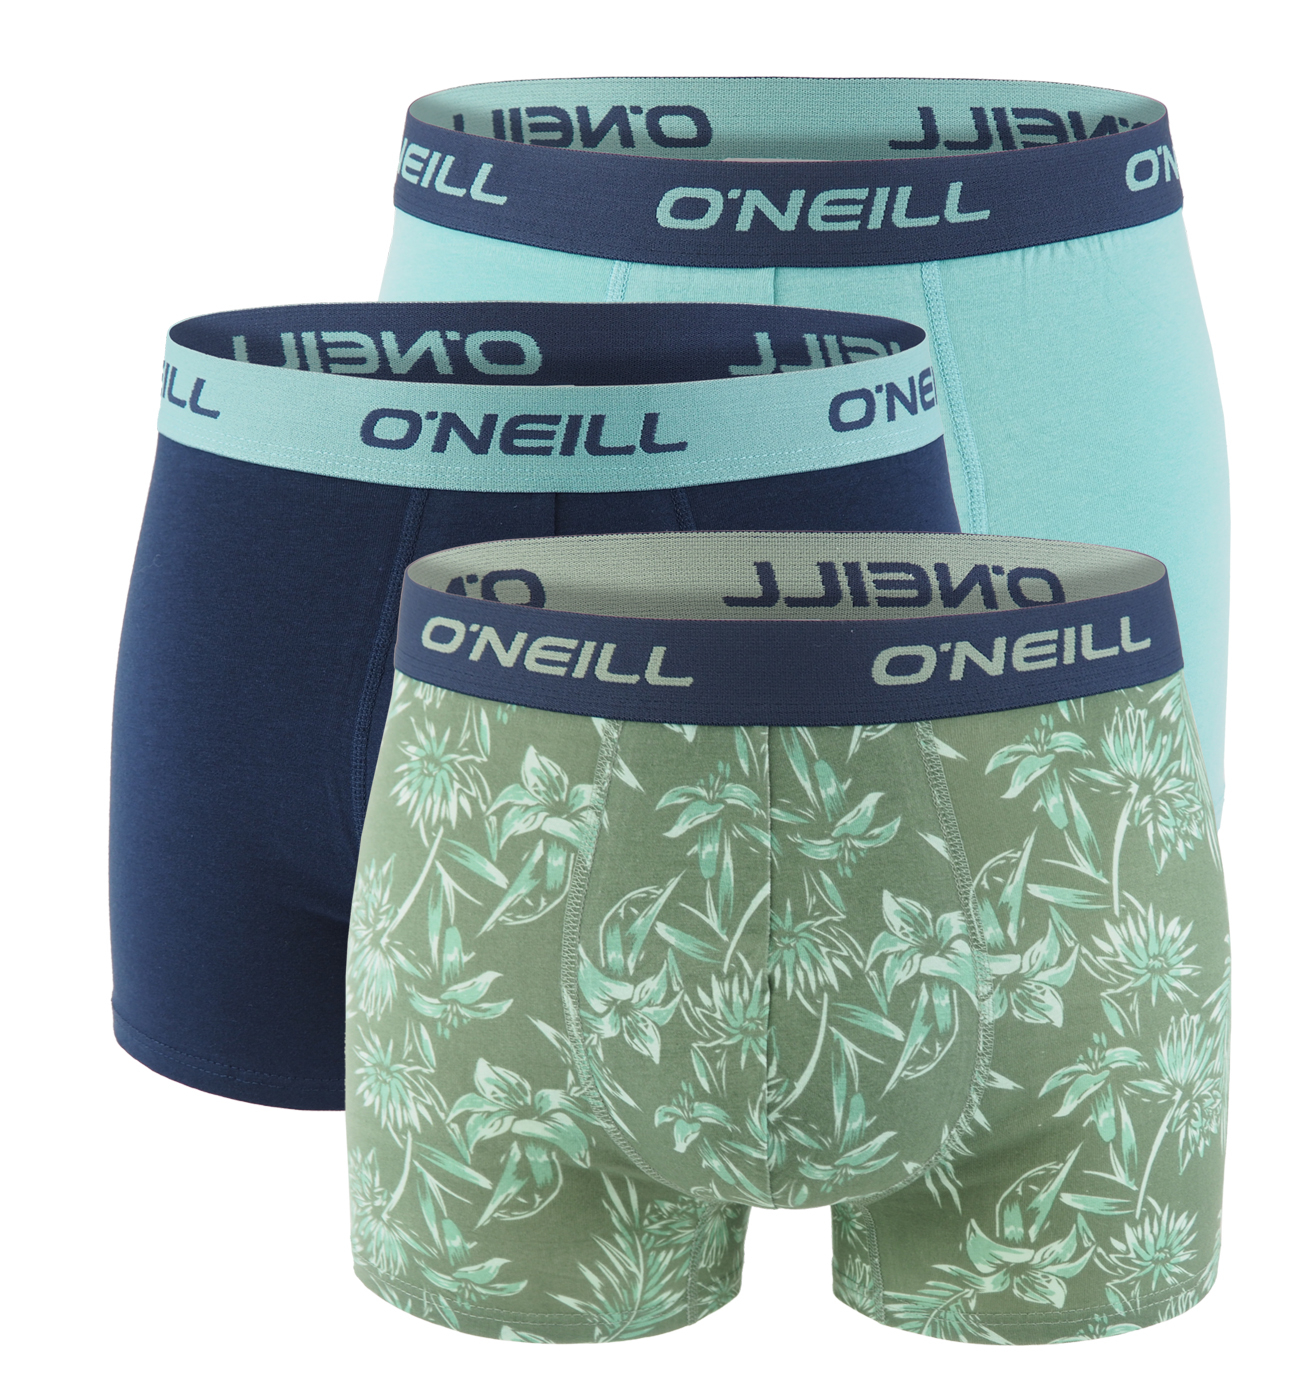 O'NEILL - boxerky 3PACK marine & green flower color combo - limitovana edicia-XXL (103-108 cm)